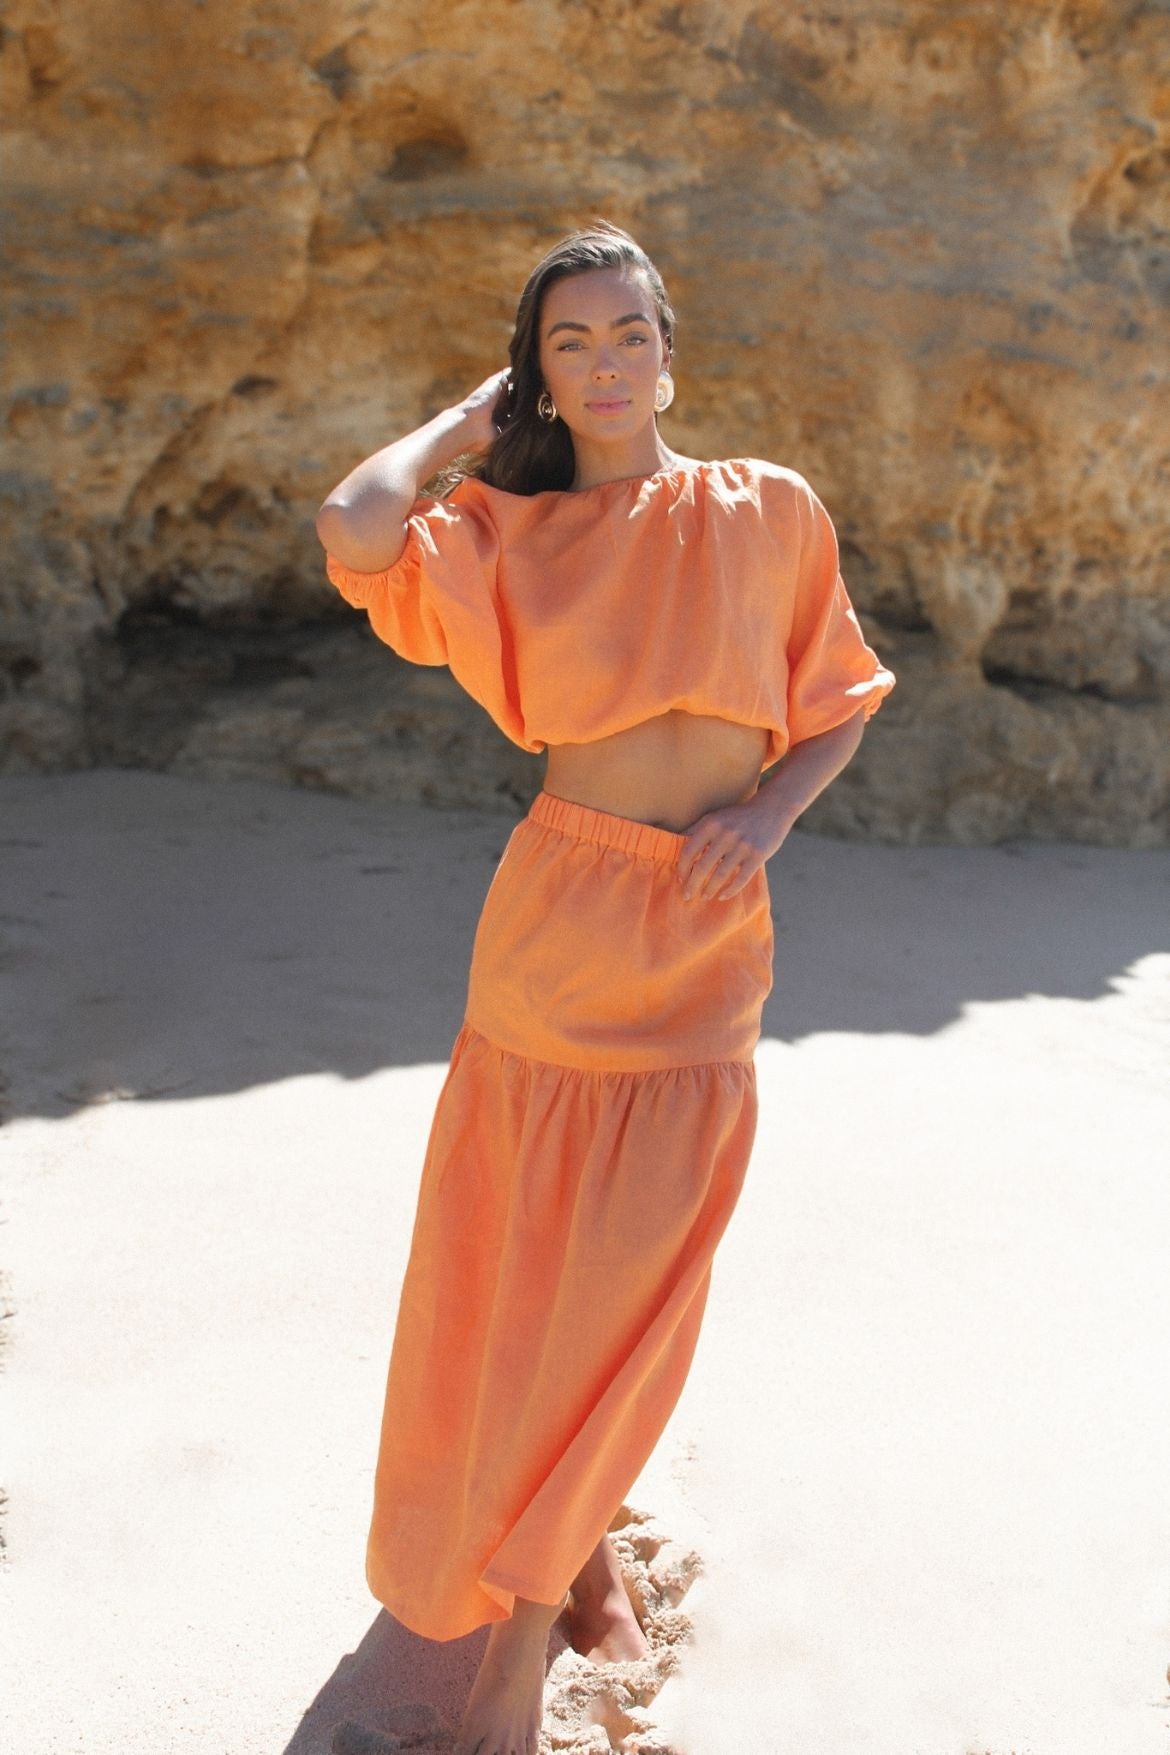 The Ease Kea Top - Backless linen top in orange tangerine